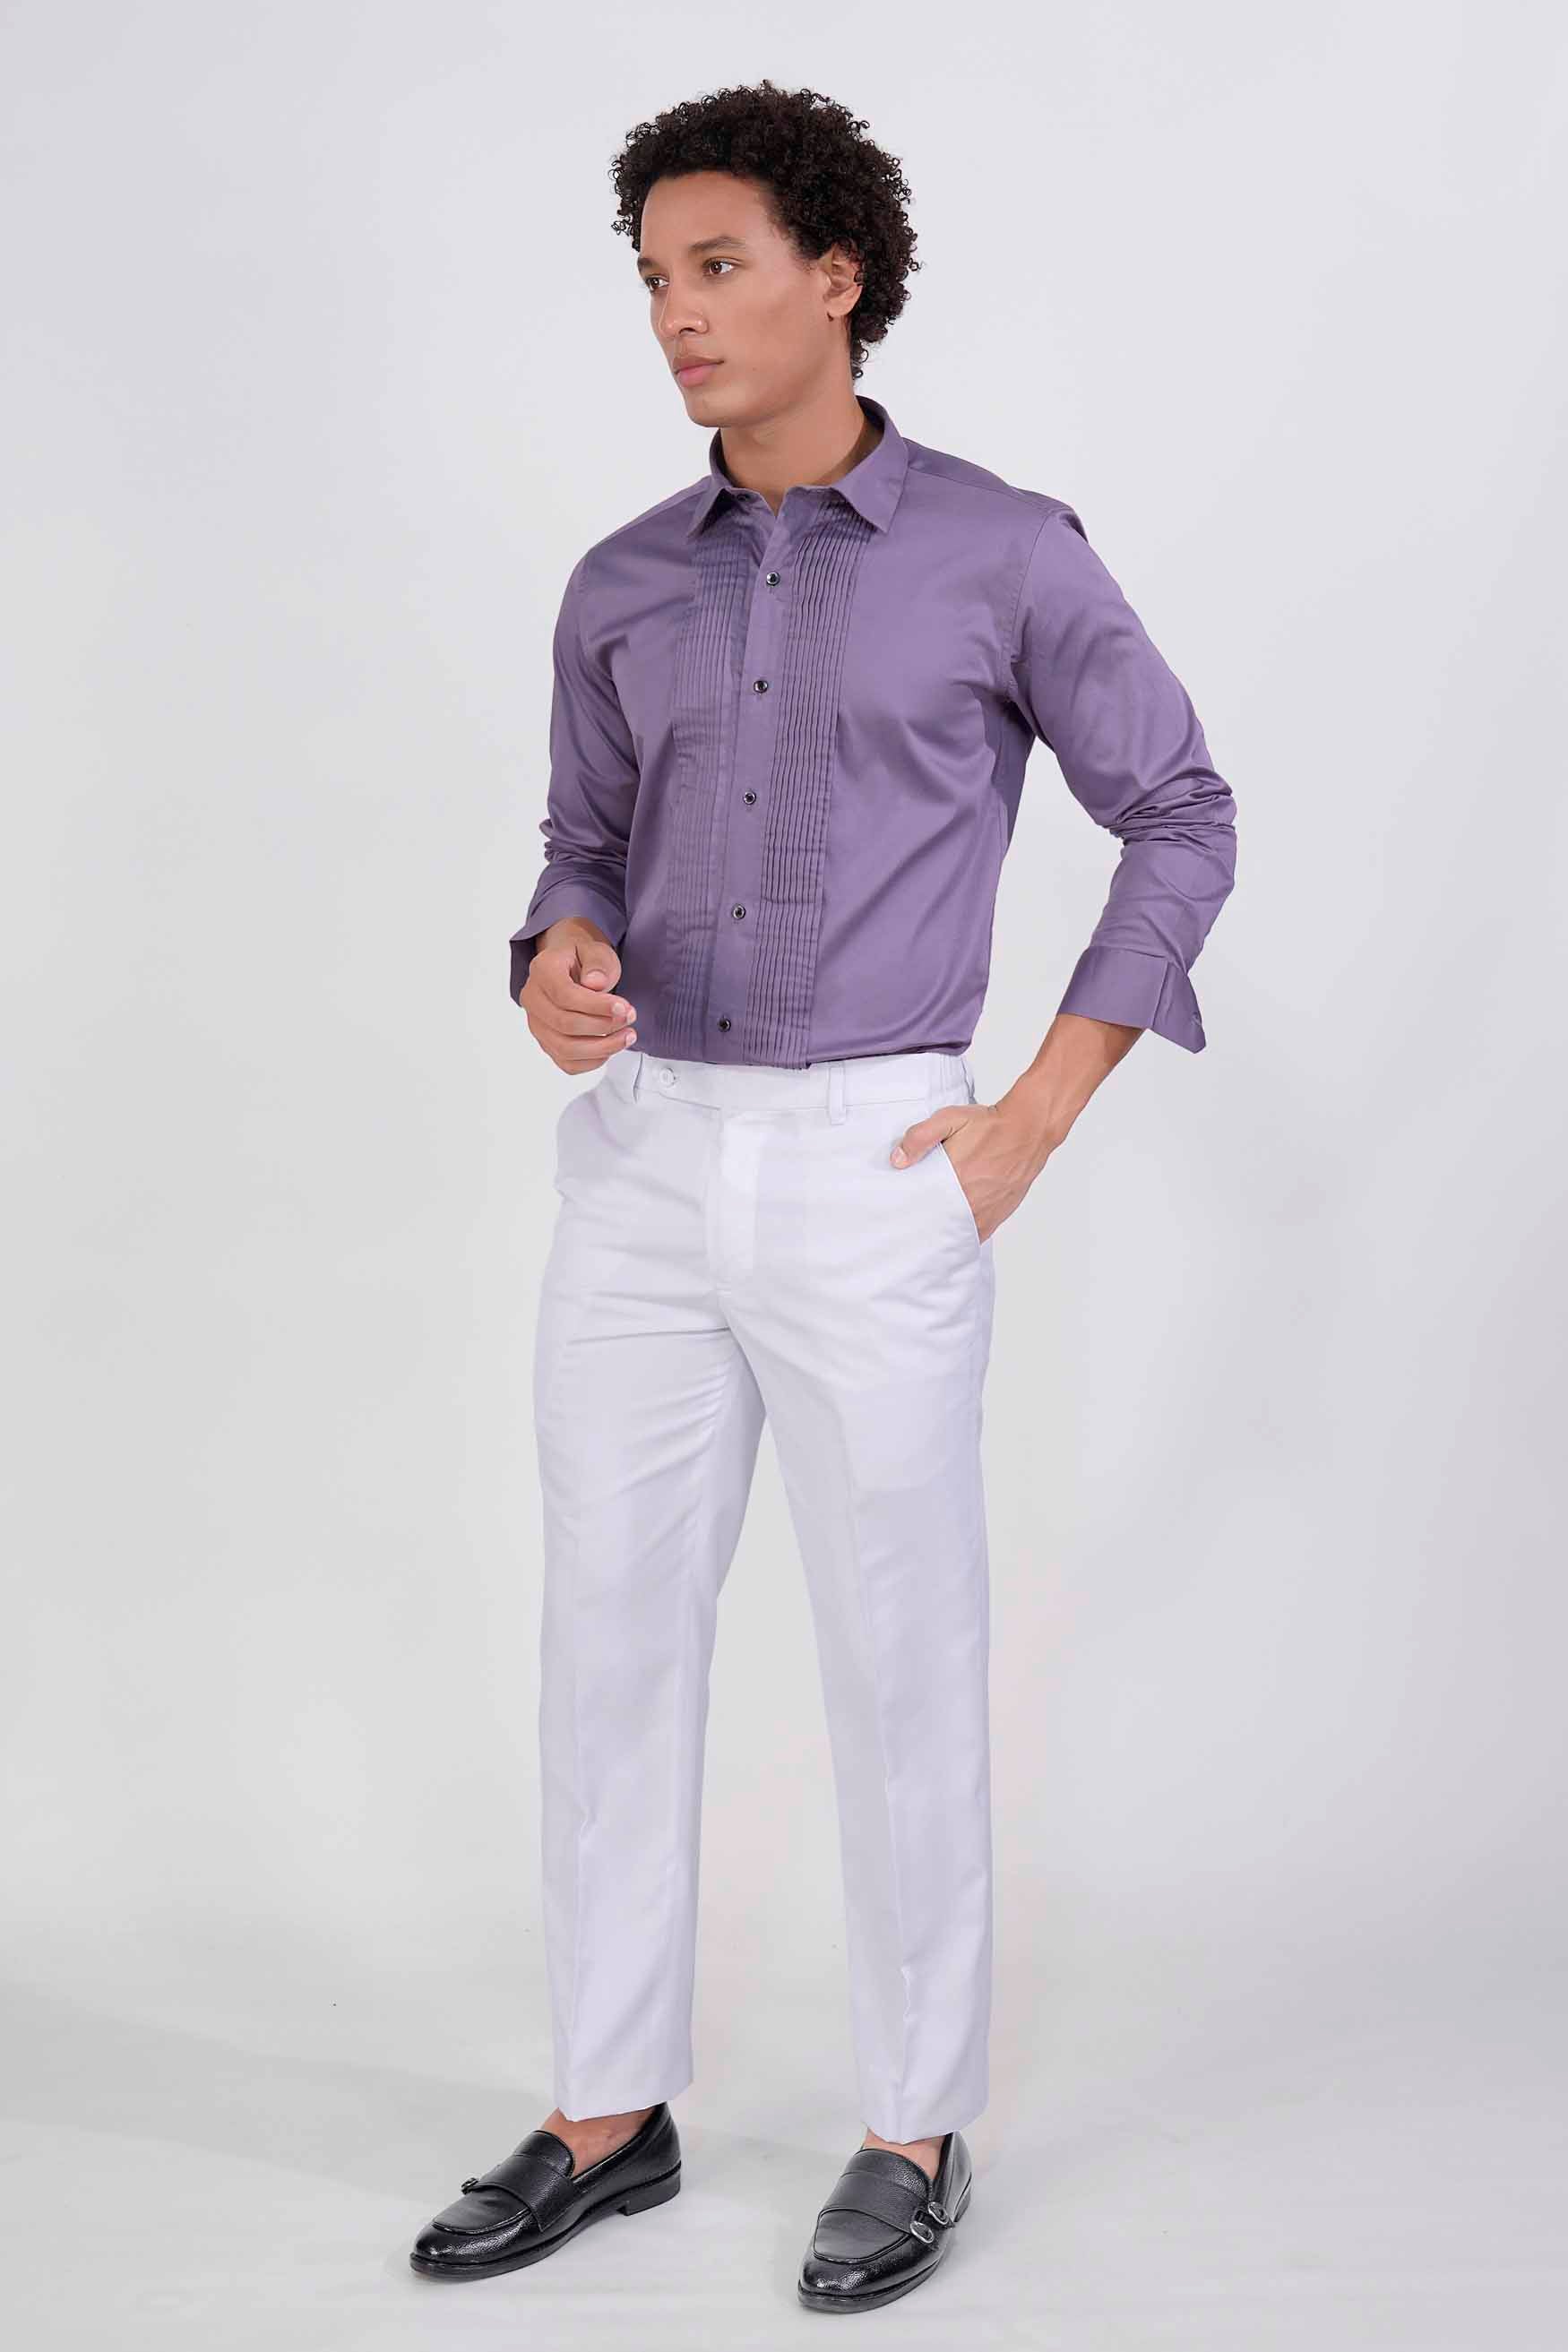 Amethyst Smoke Lavender Subtle Sheen Super Soft Premium Cotton Tuxedo Shirt